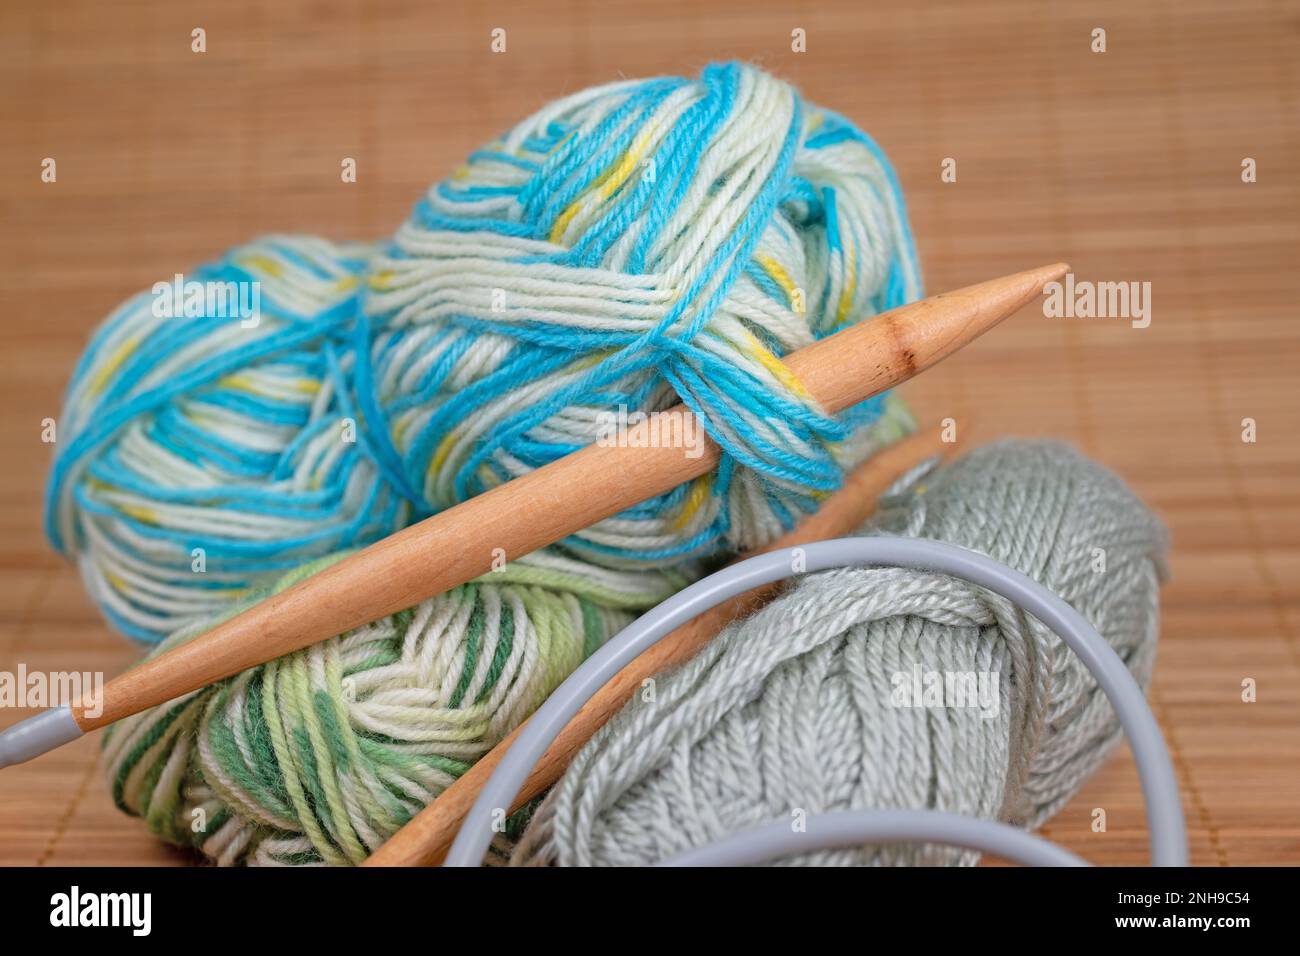 Crochet yarn and crochet hook in a closeup Stock Photo